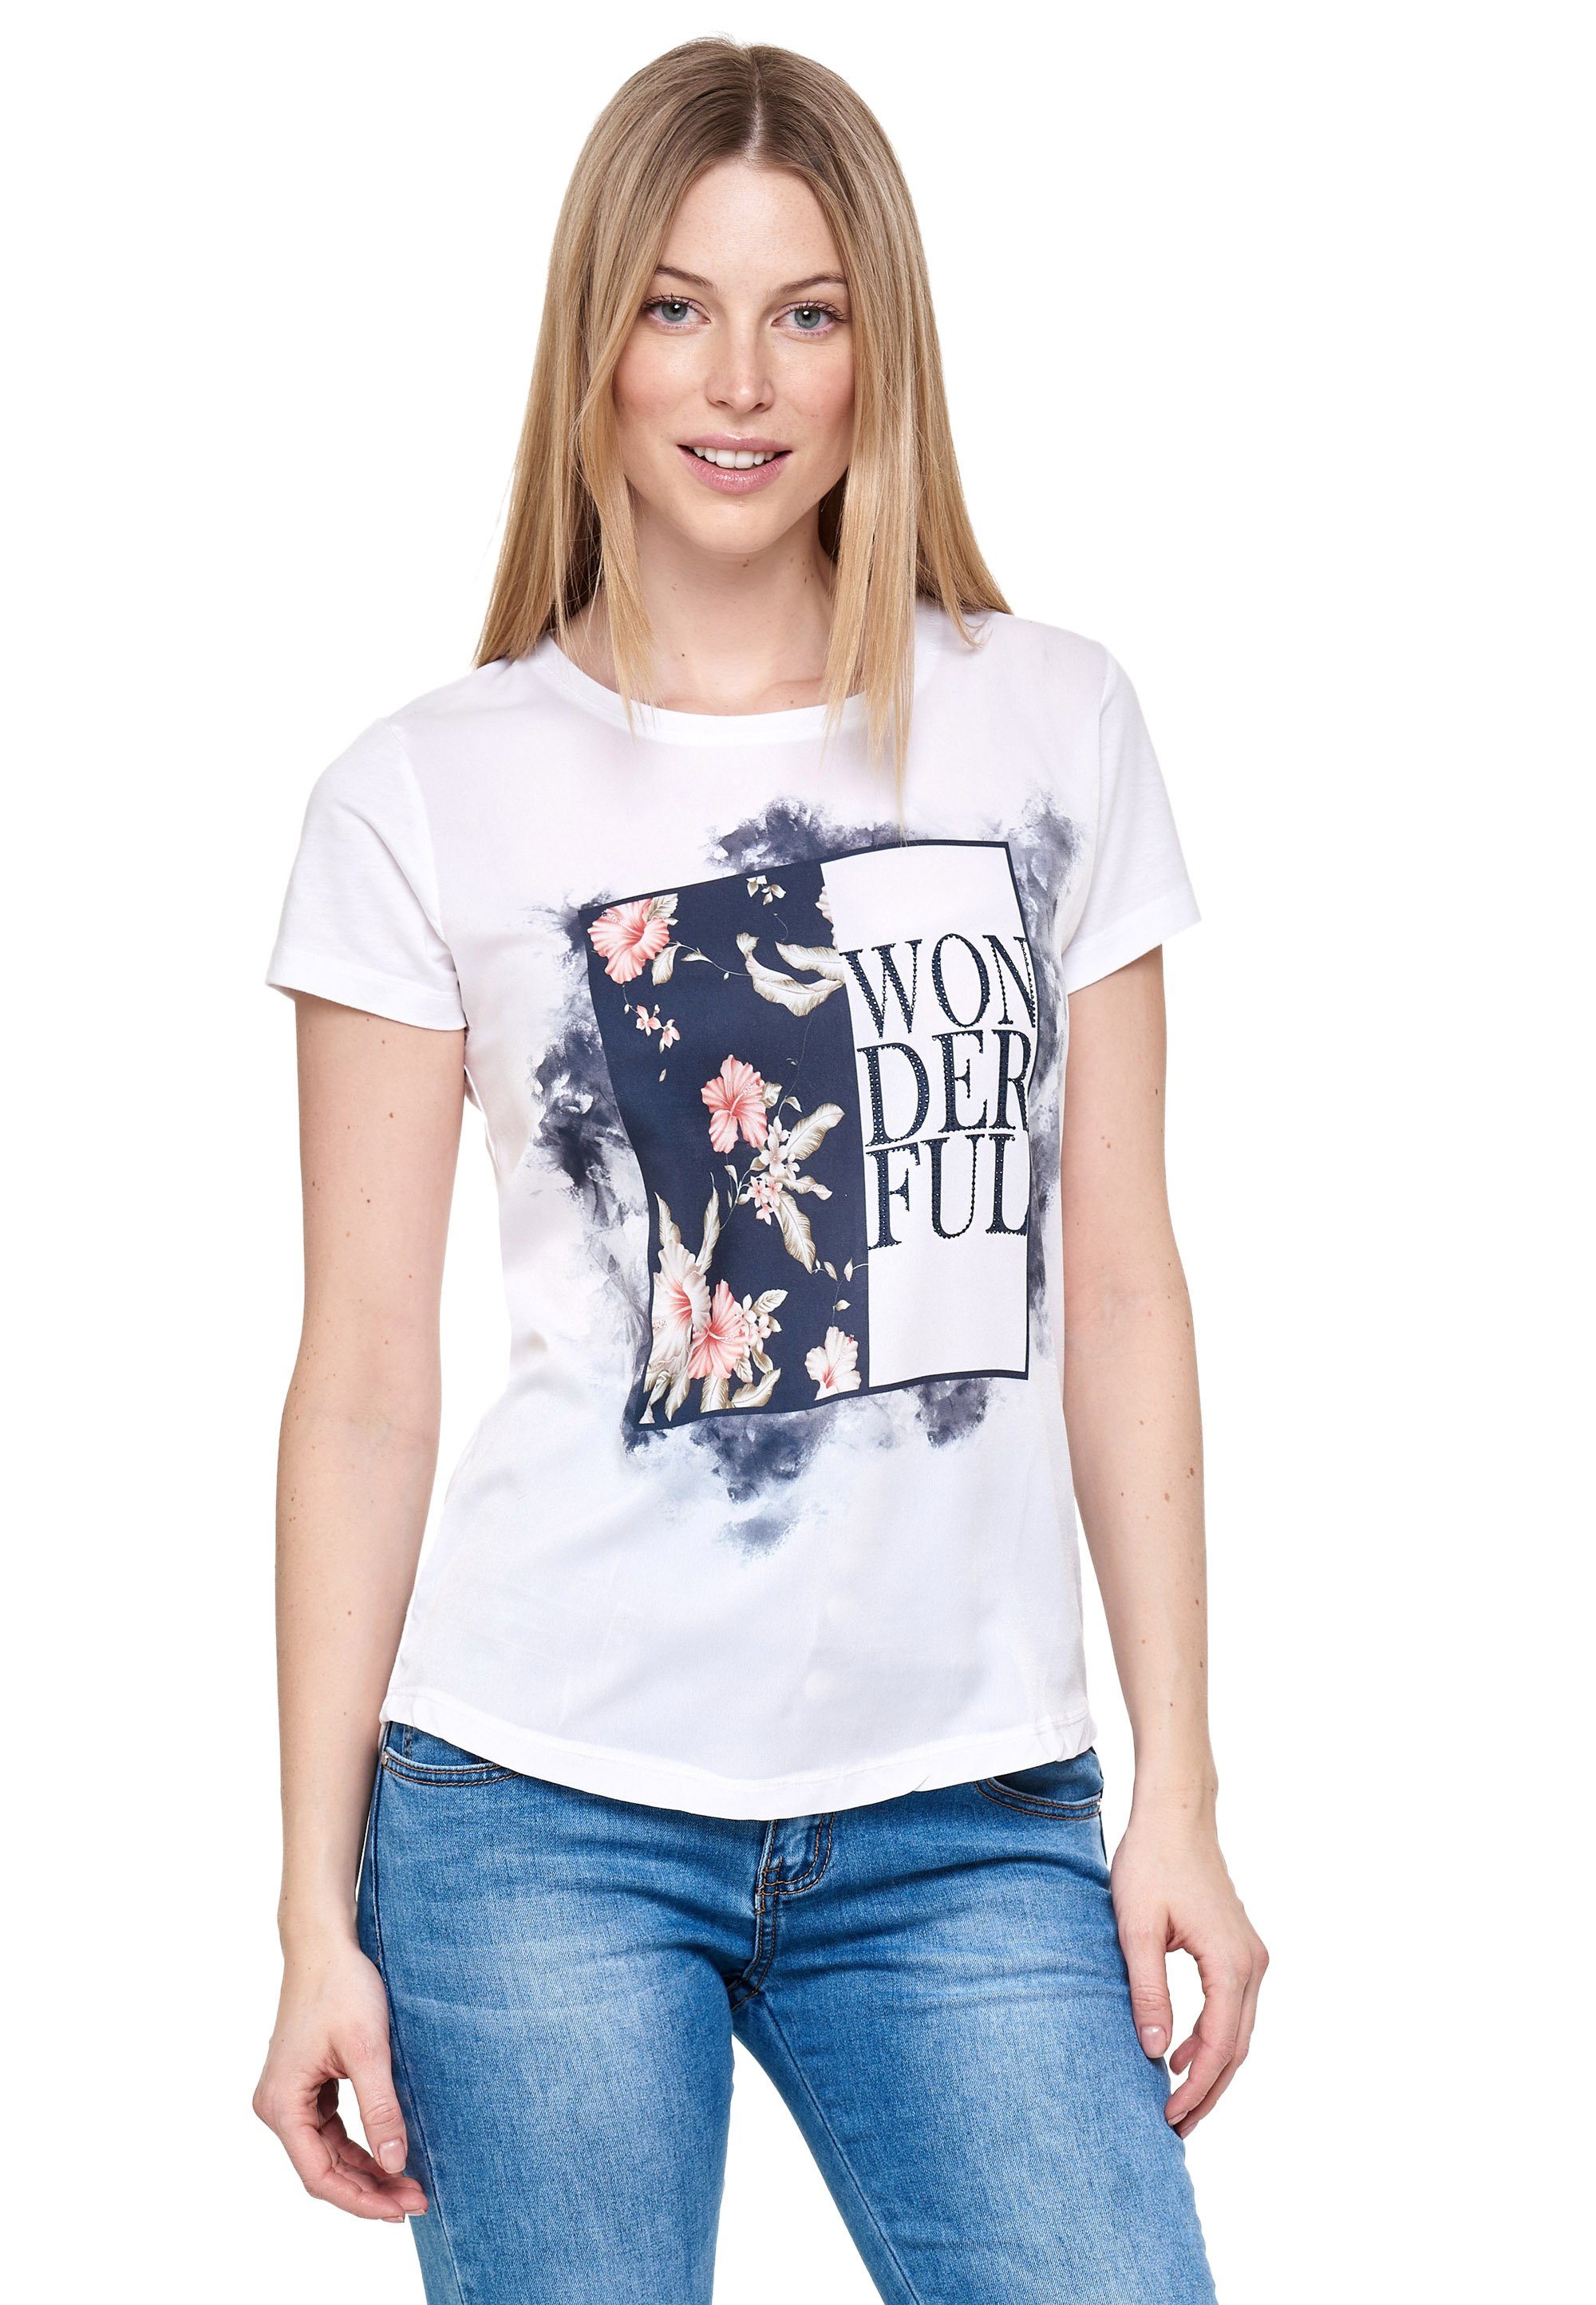 Decay T-Shirt schickem Blumenmotiv mit